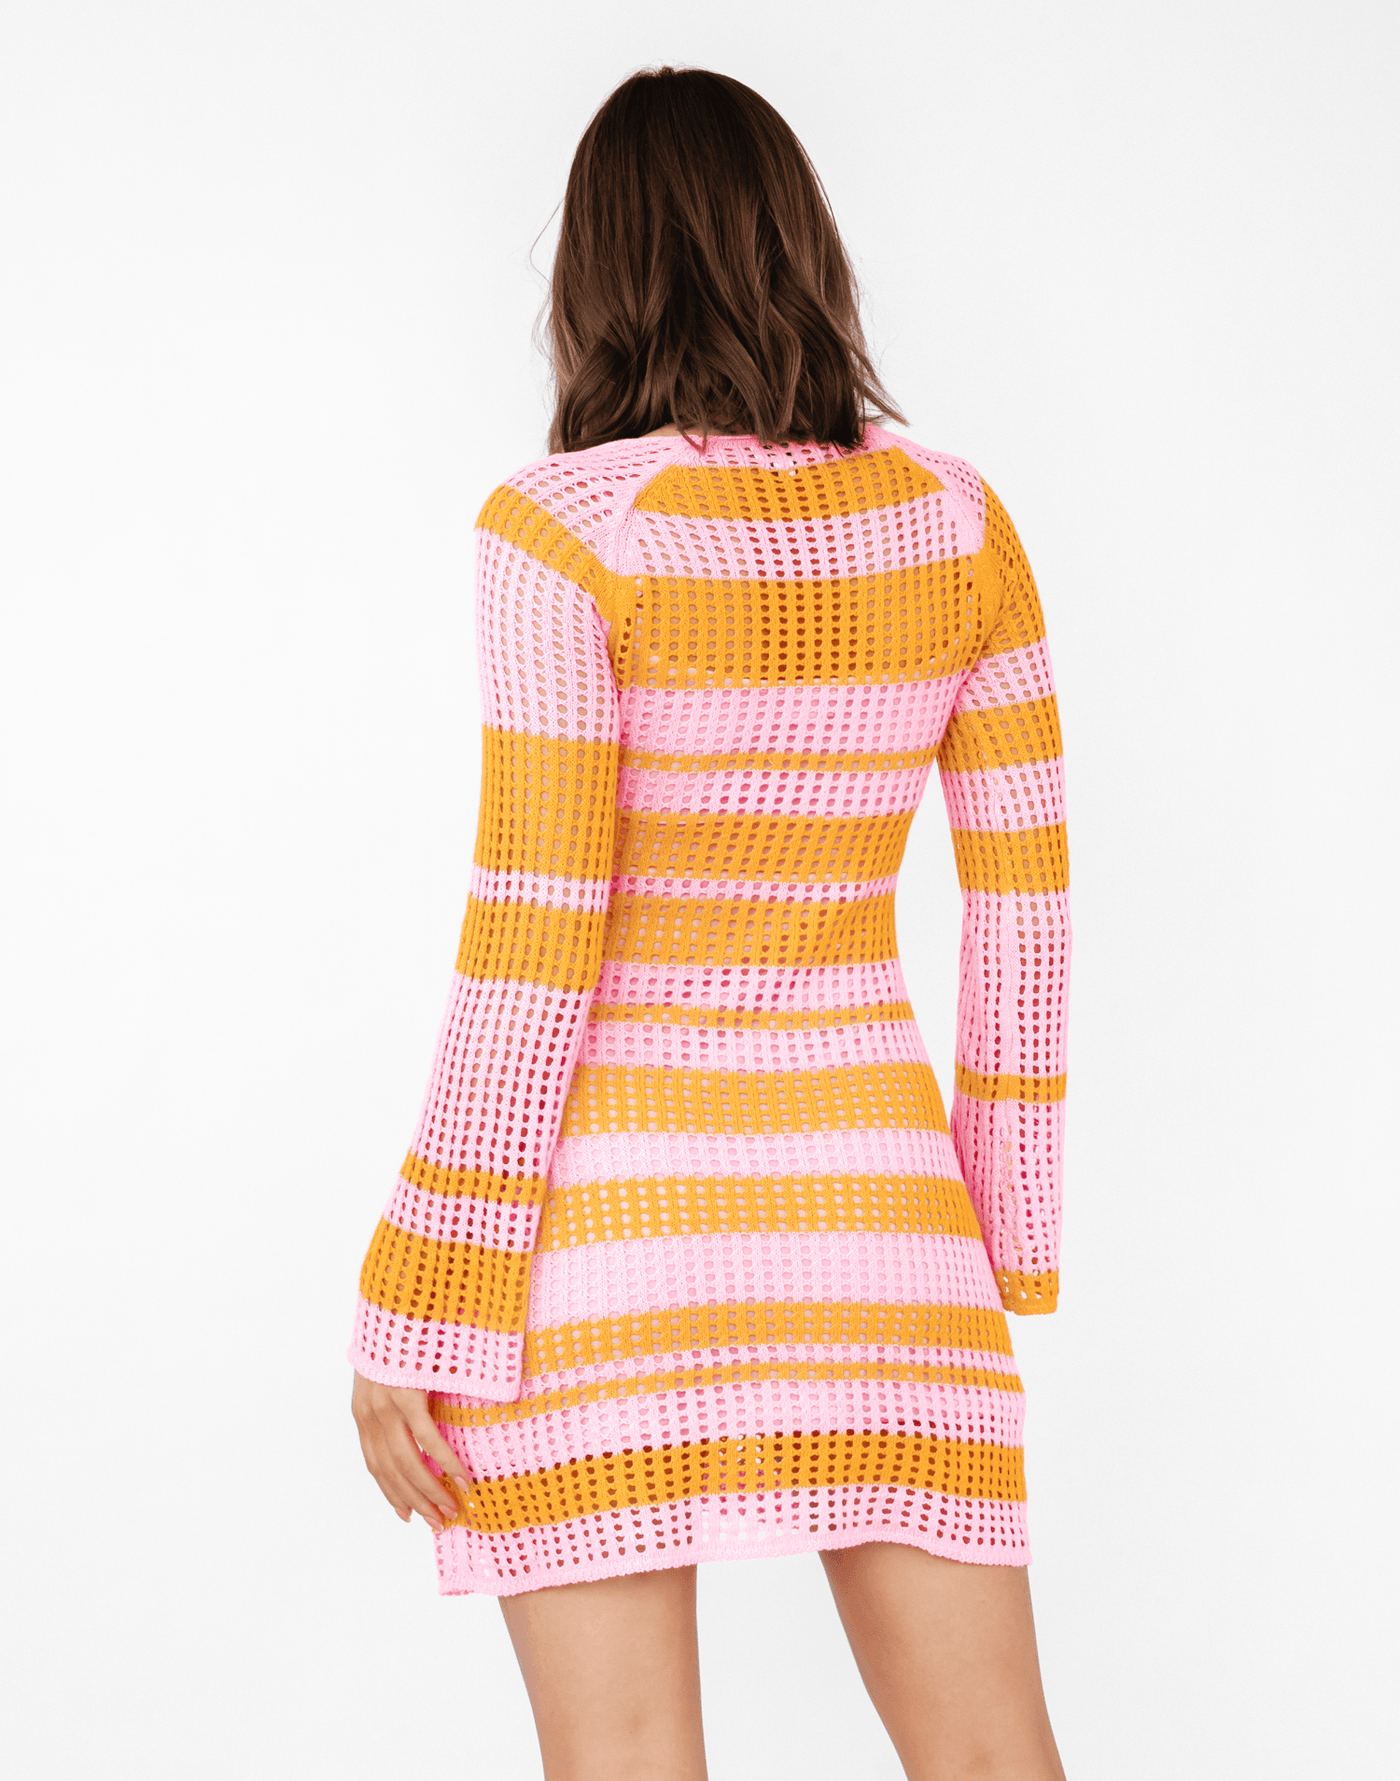 Marley Knit Mini Dress (Pink/Orange) - Knitted Mini Dress - Women's Dress - Charcoal Clothing